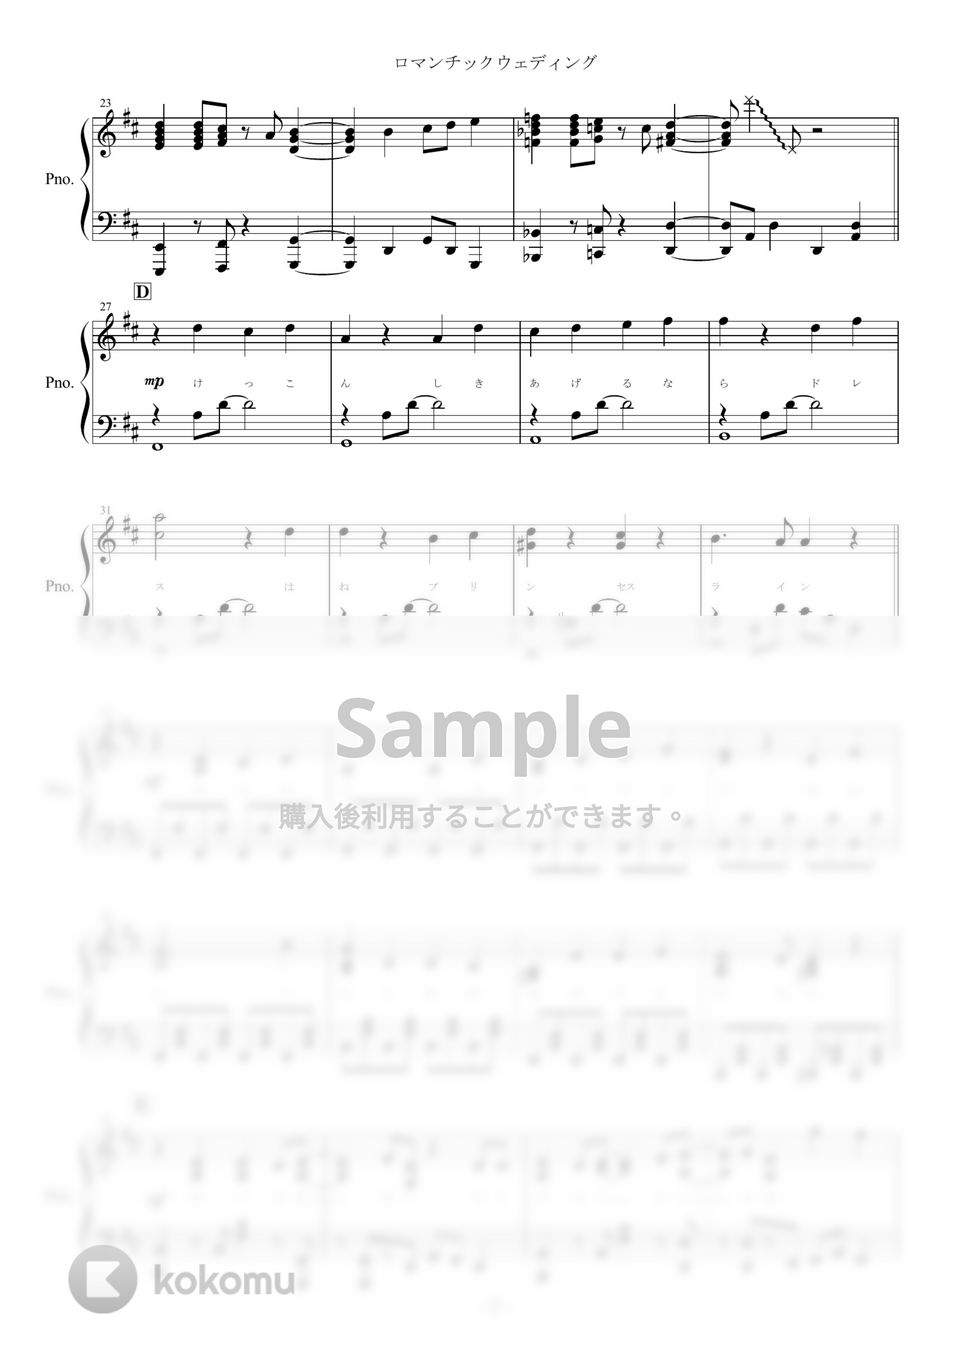 HoneyWorks - ロマンチックウェディング (ピアノ楽譜（全８ページ）) by yoshi